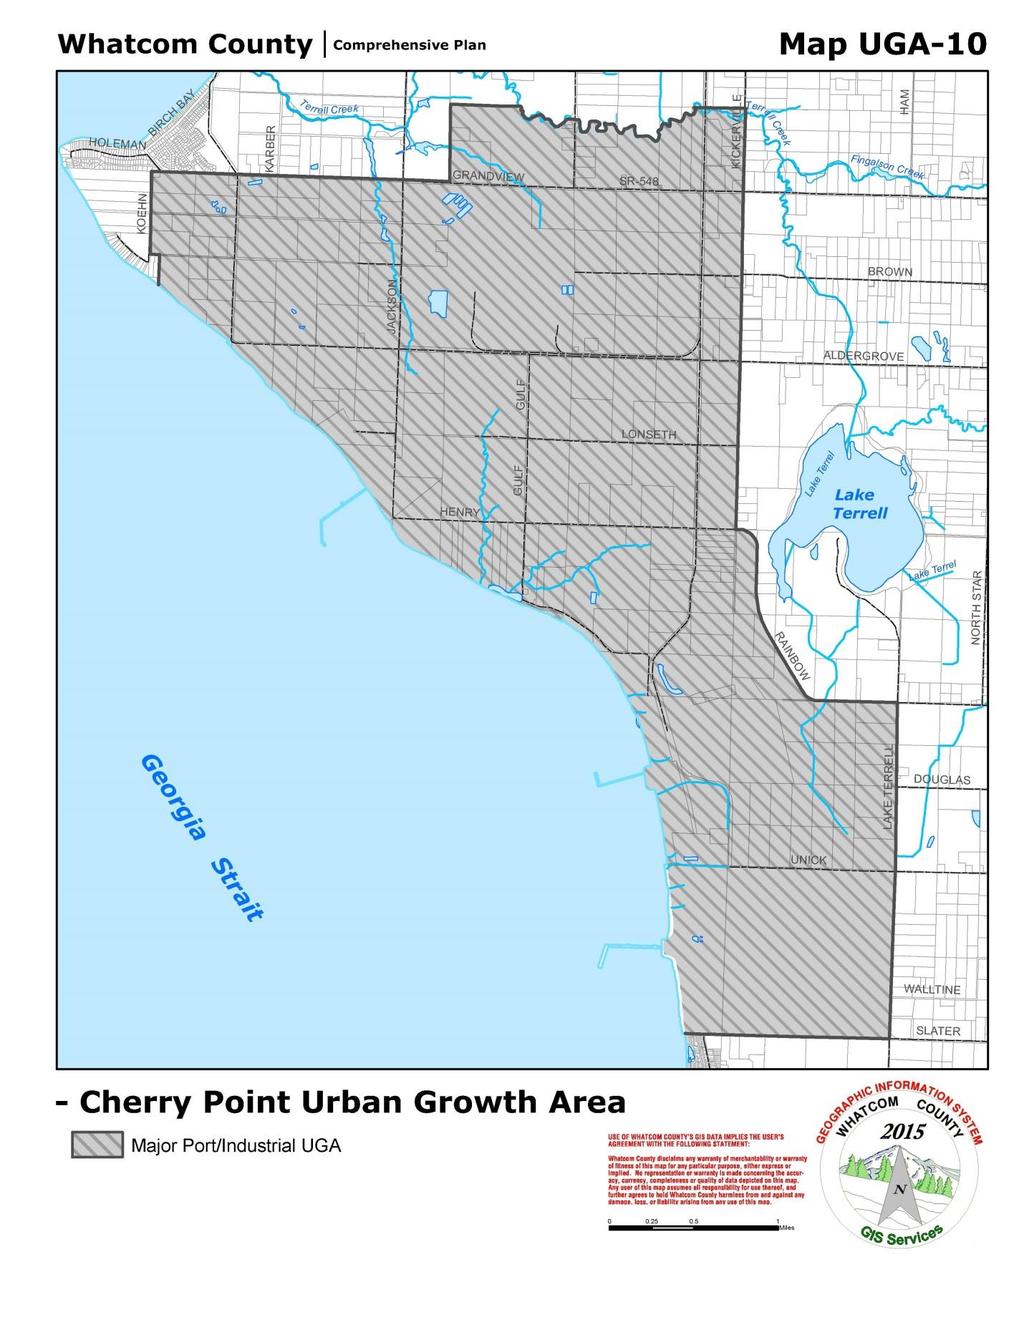 Cherry Point Planning